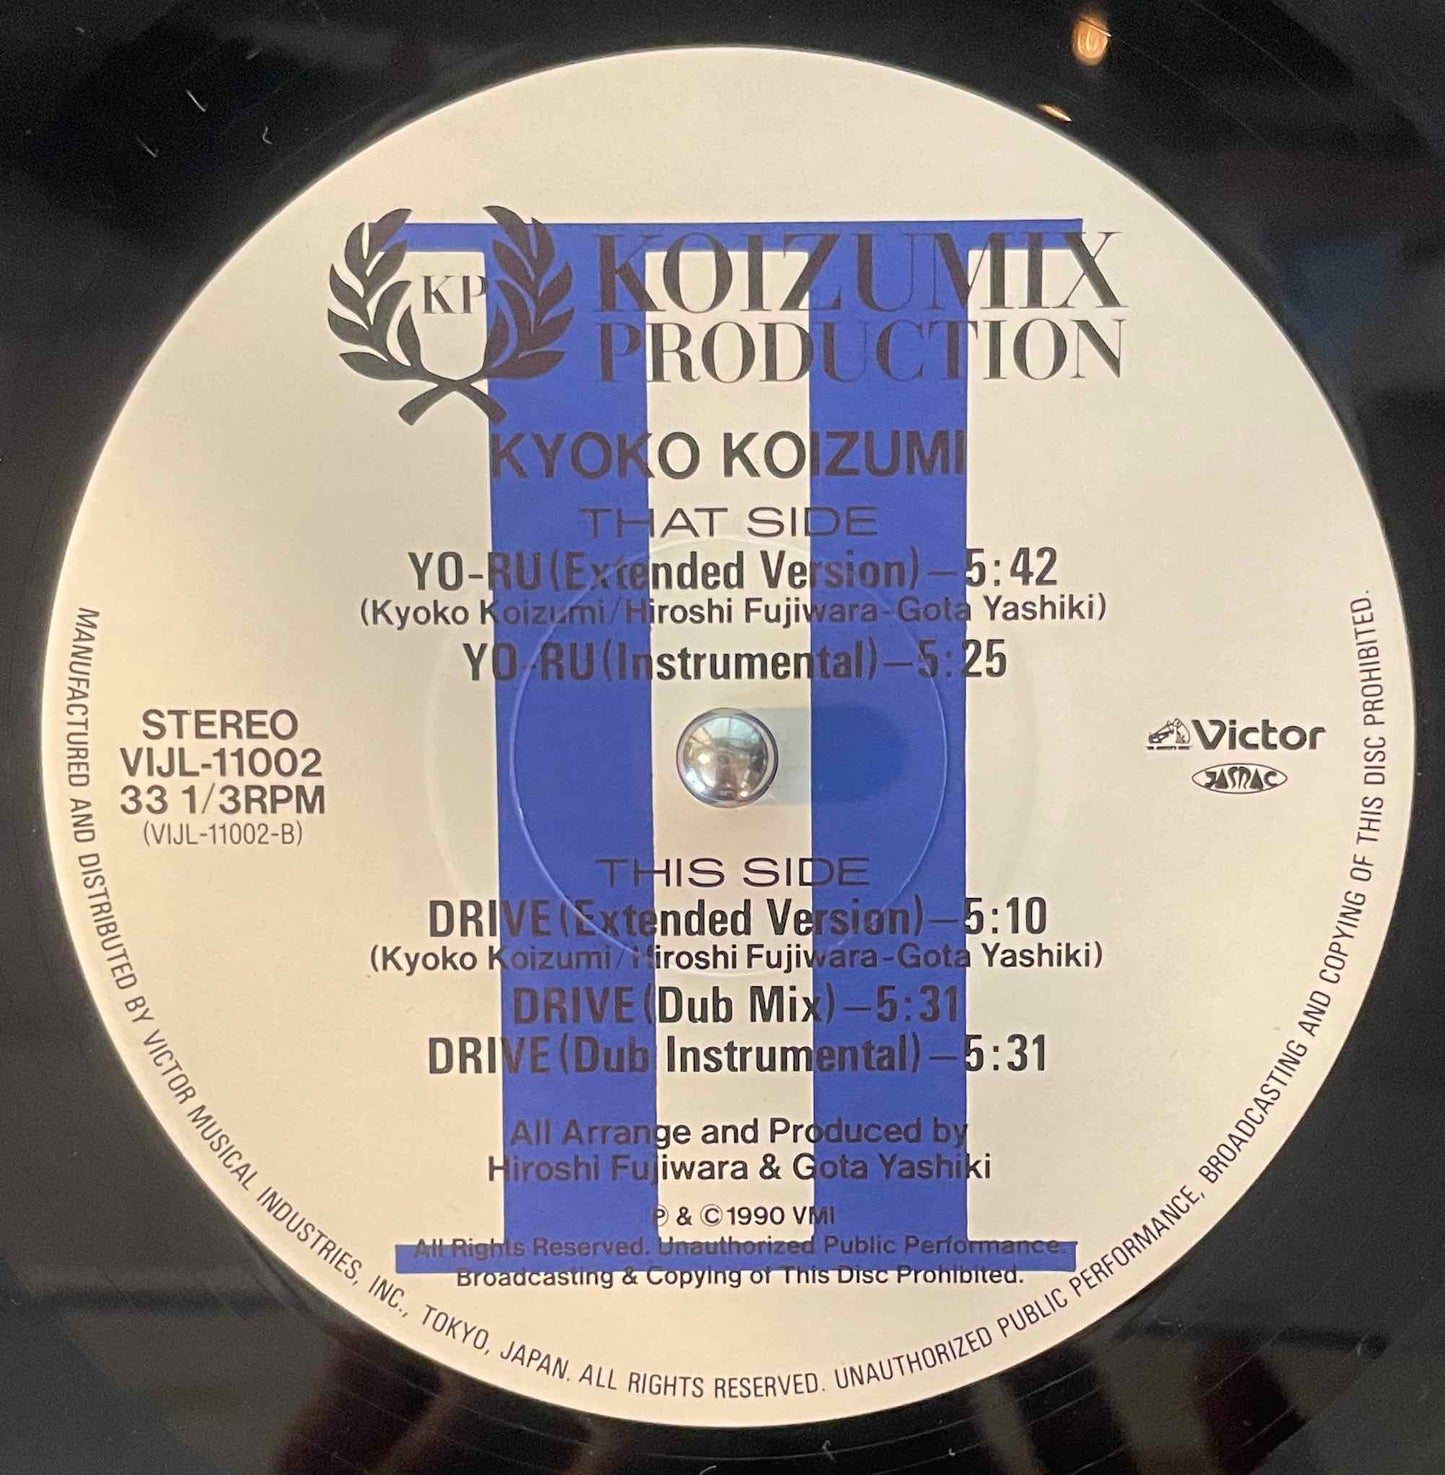 Kyoko Koizumi – Koizumix Production II 12 inch single label image back